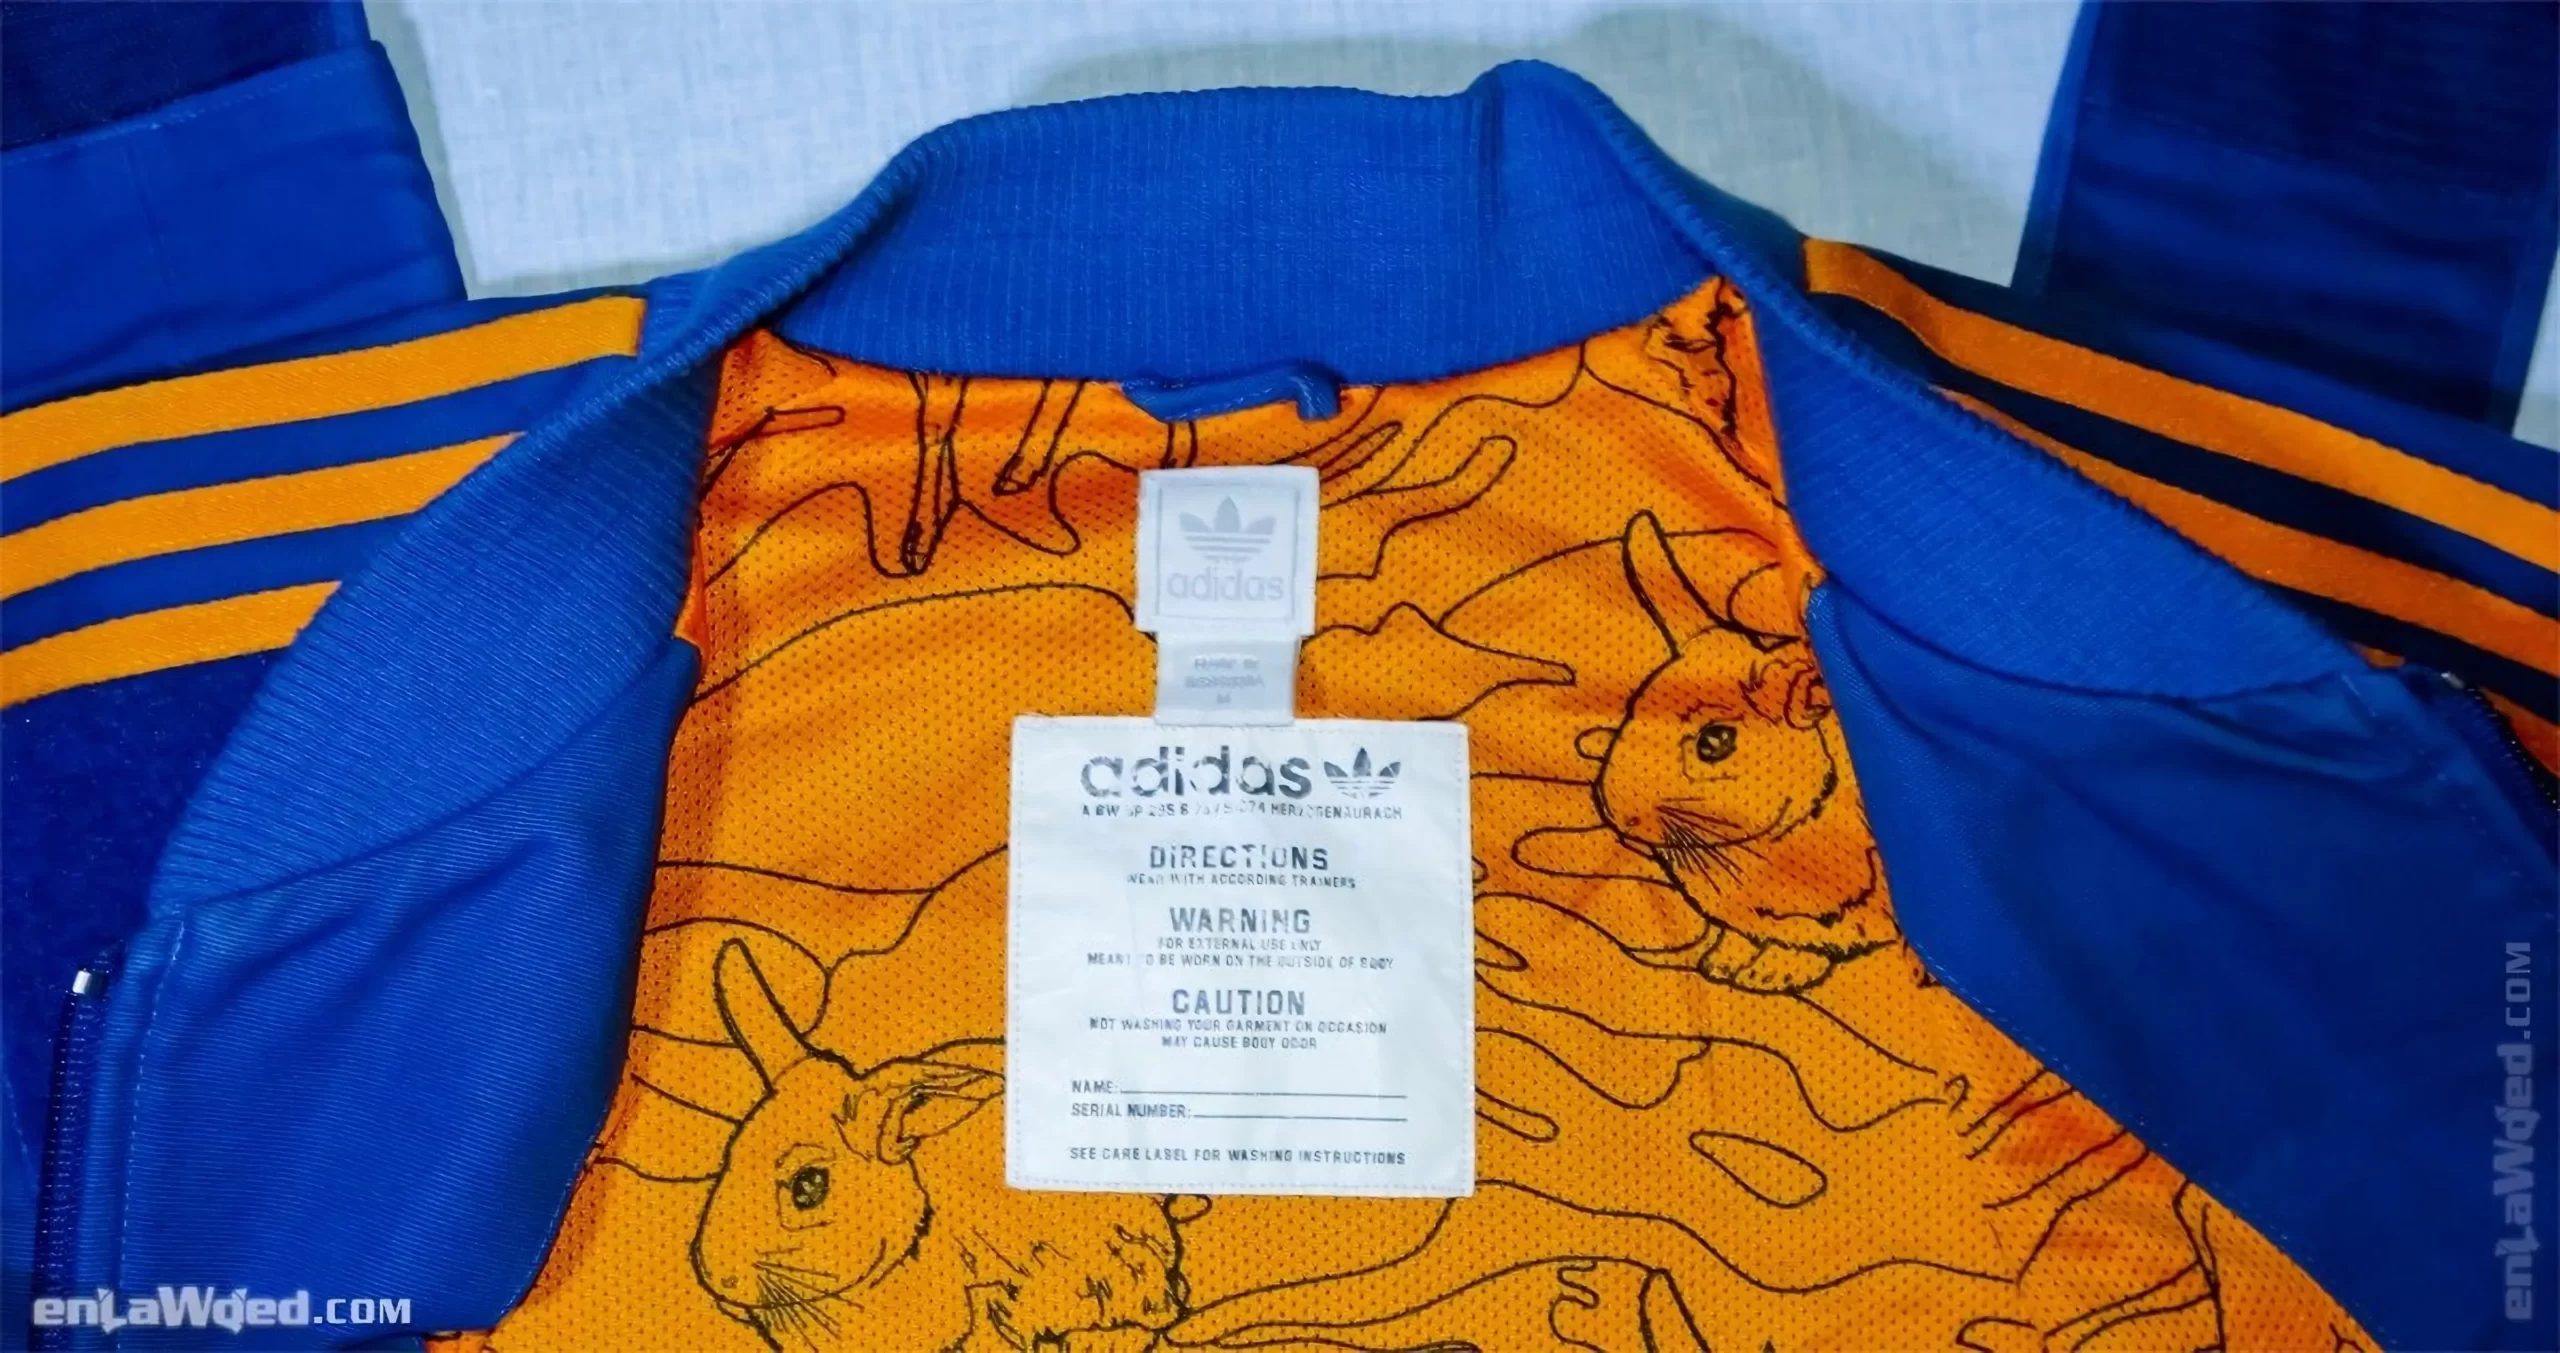 Men’s 2005 Adidas Originals Military Peace Jacket: Unstoppable (EnLawded.com file #lmchc1f0qami7e3vfco)